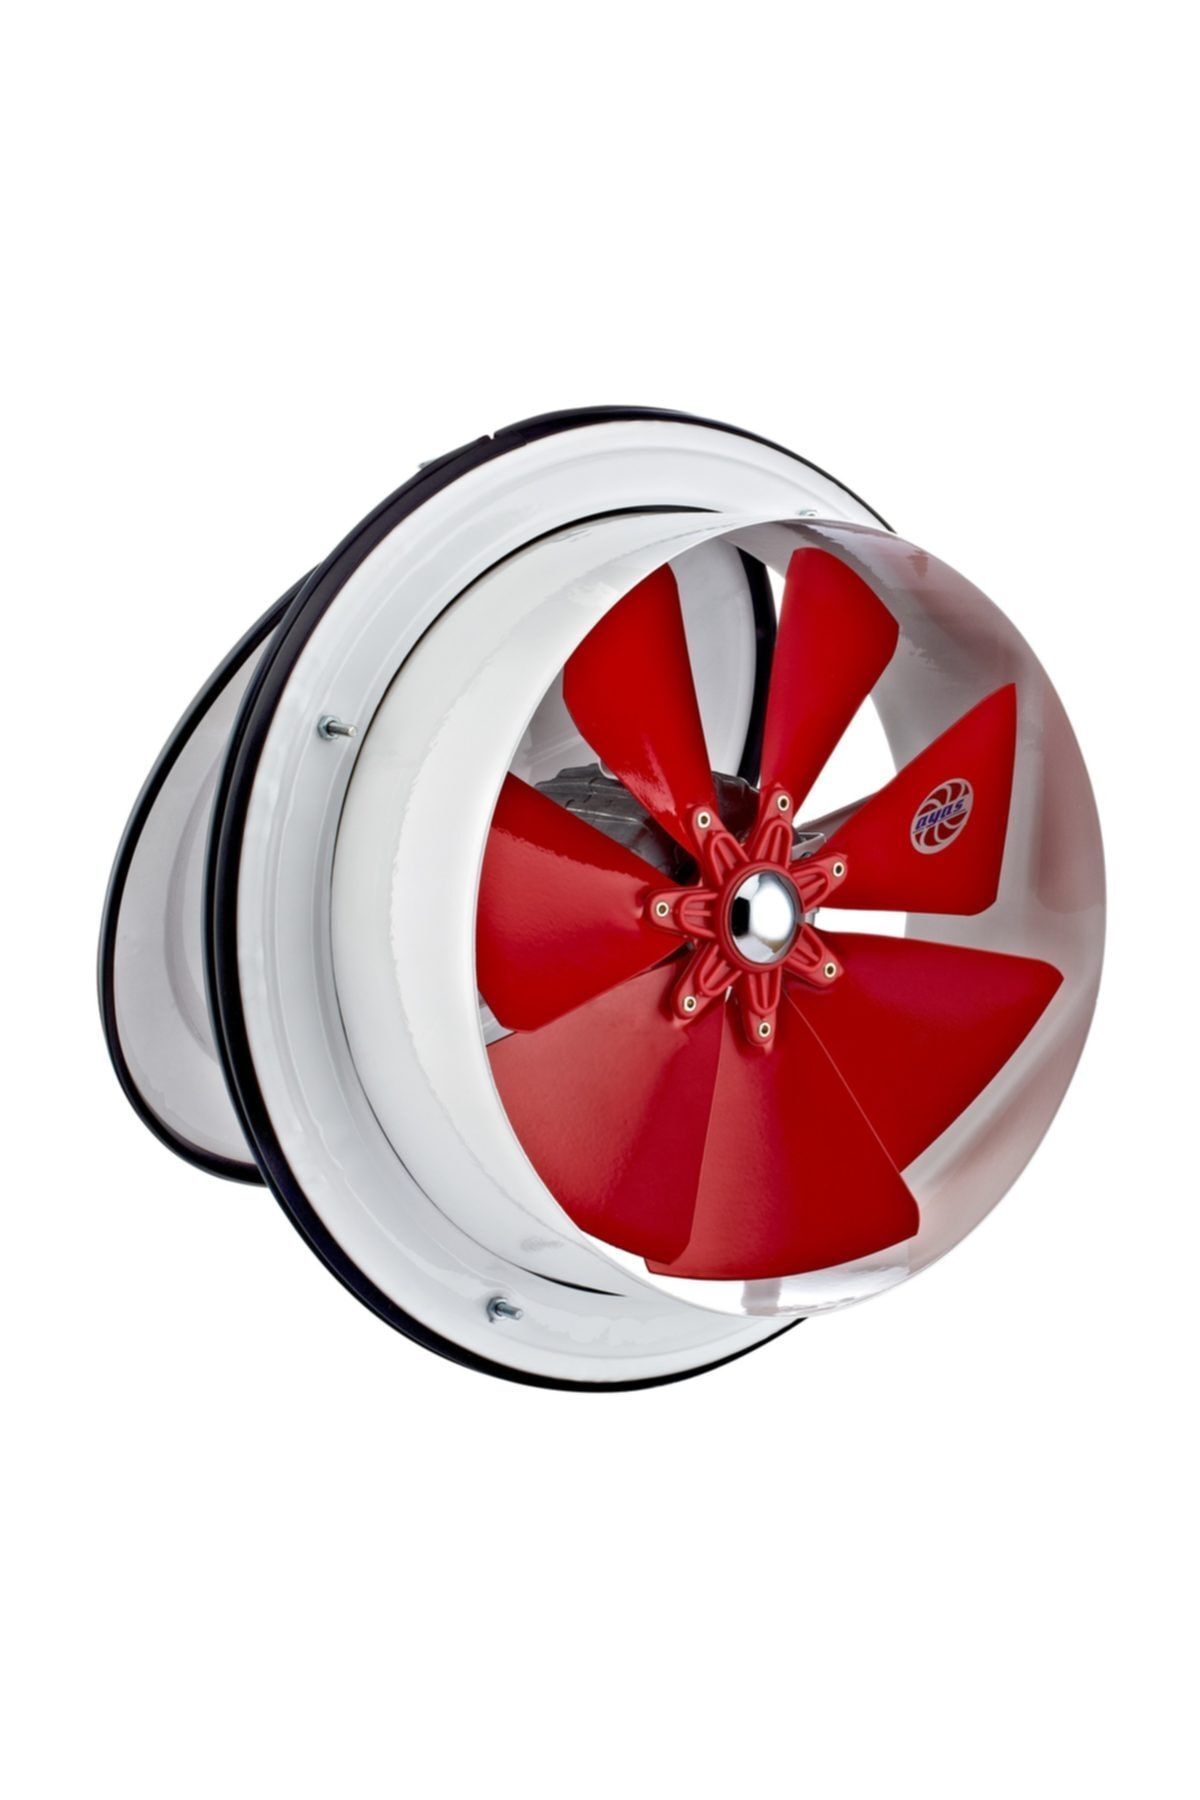 AYAS 25 Cm Çapında Kta-250-4k-m 1500 D/d 220 230 Volt Monofaze Kapaklı Tip Aspiratör Fan